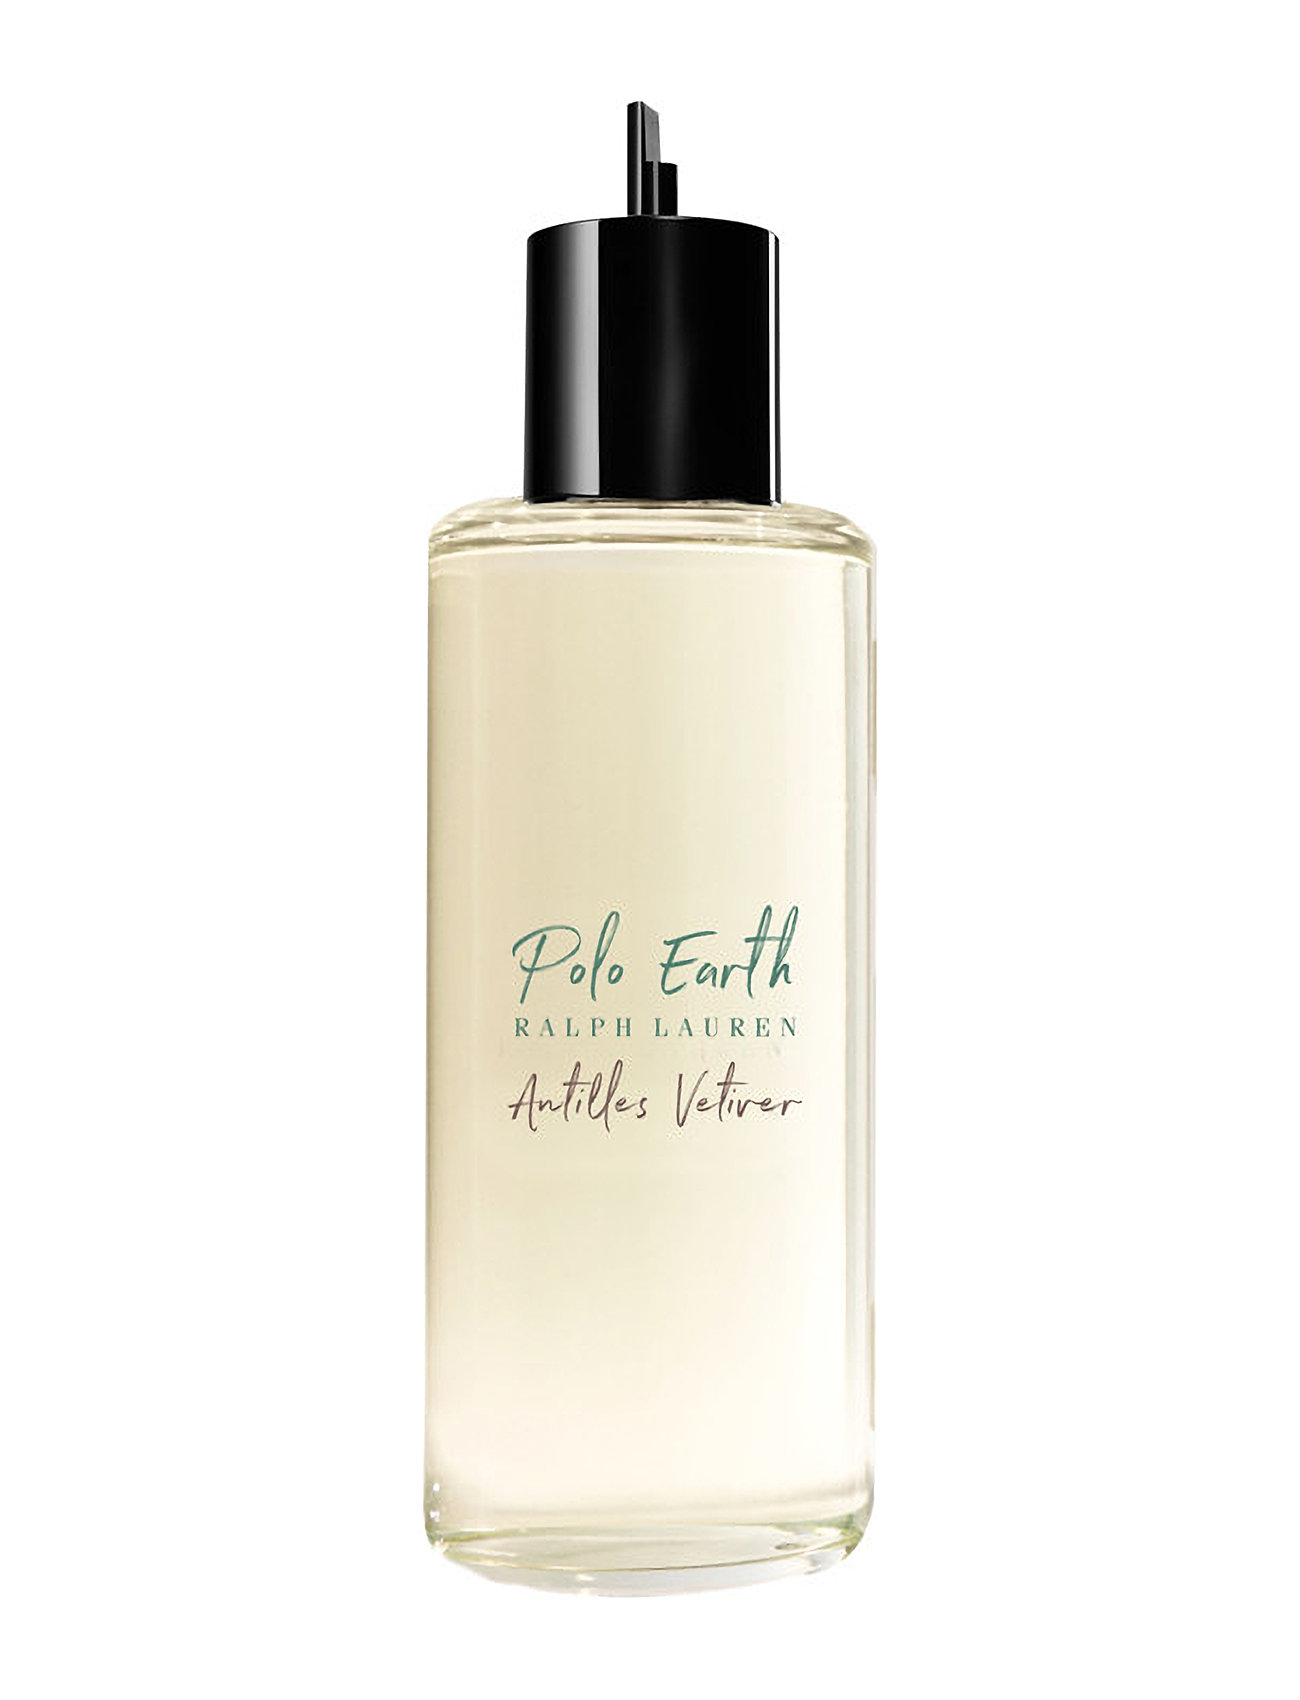 Polo Earth Antilles Refill Beauty Women Fragrance Perfume Mists Nude Ralph Lauren - Fragrance